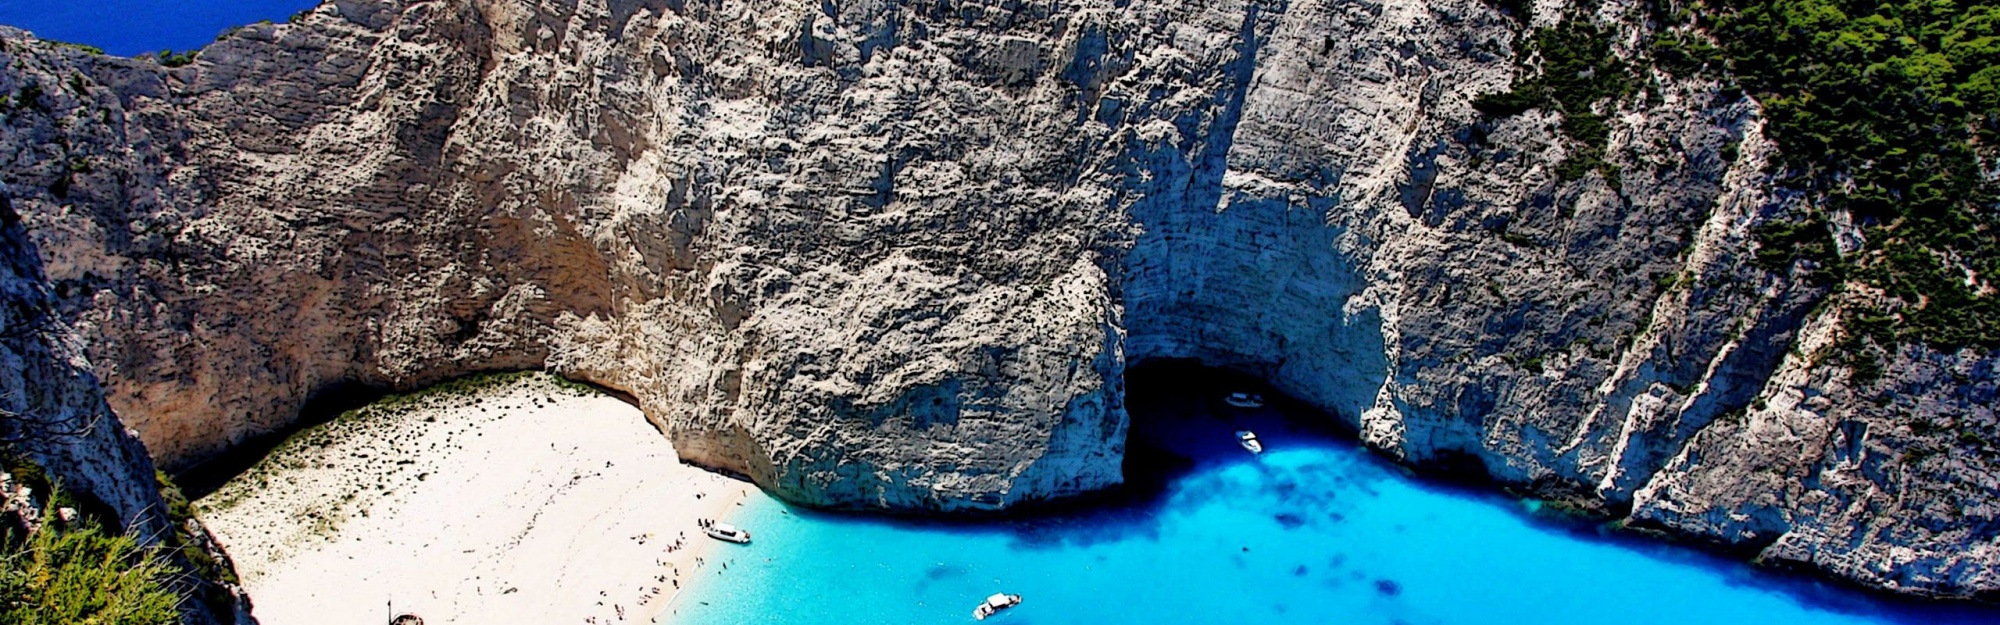 Sea Zakinthos Elation Lonian Lslands Greece Nature Landscapes